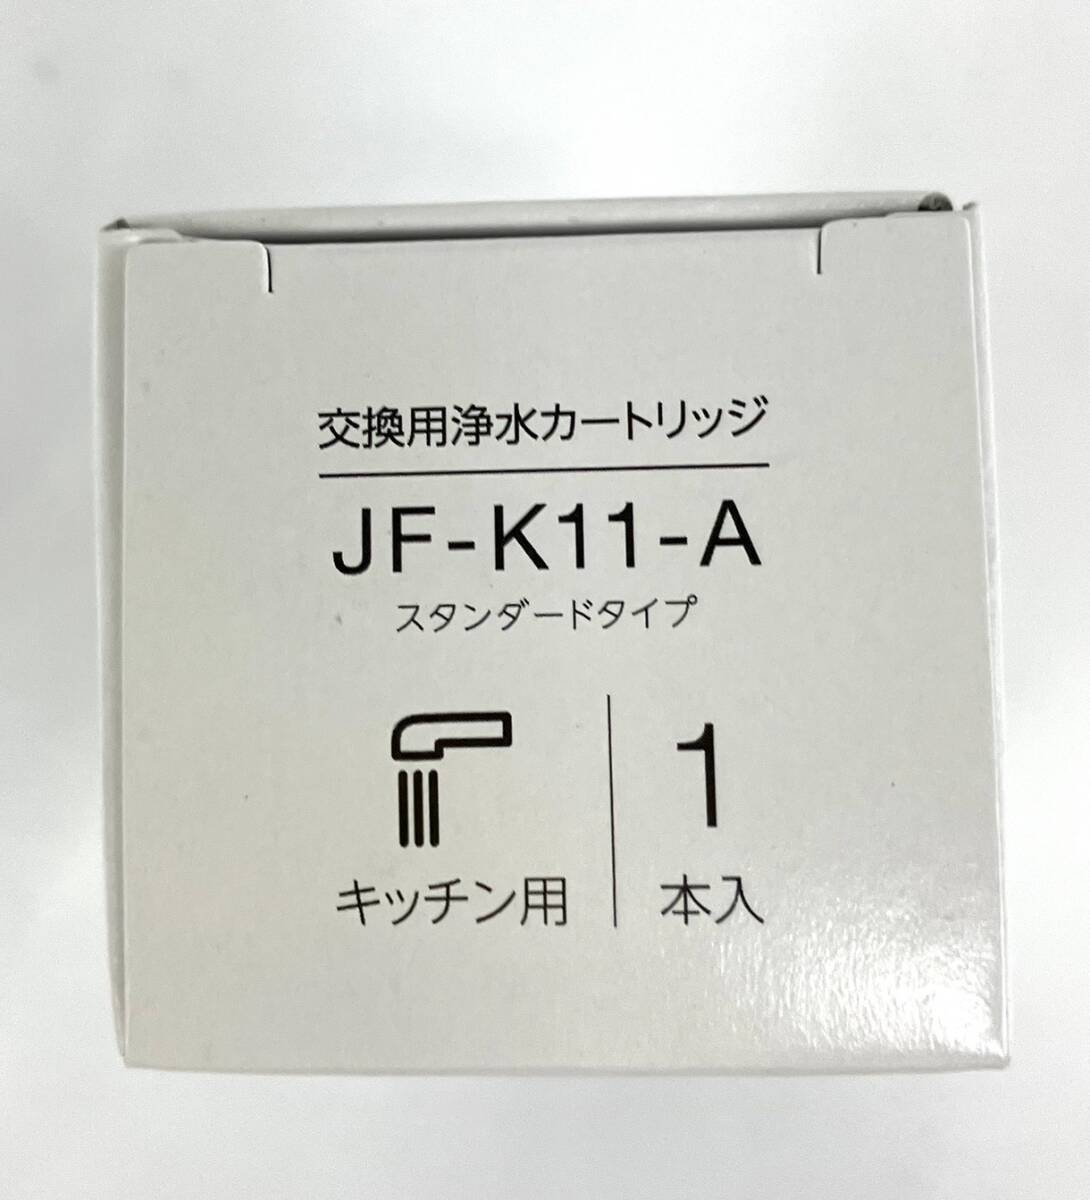 LIXIL( Lixil ) INAX для замены . вода картридж 3 шт. комплект JF-K11-A